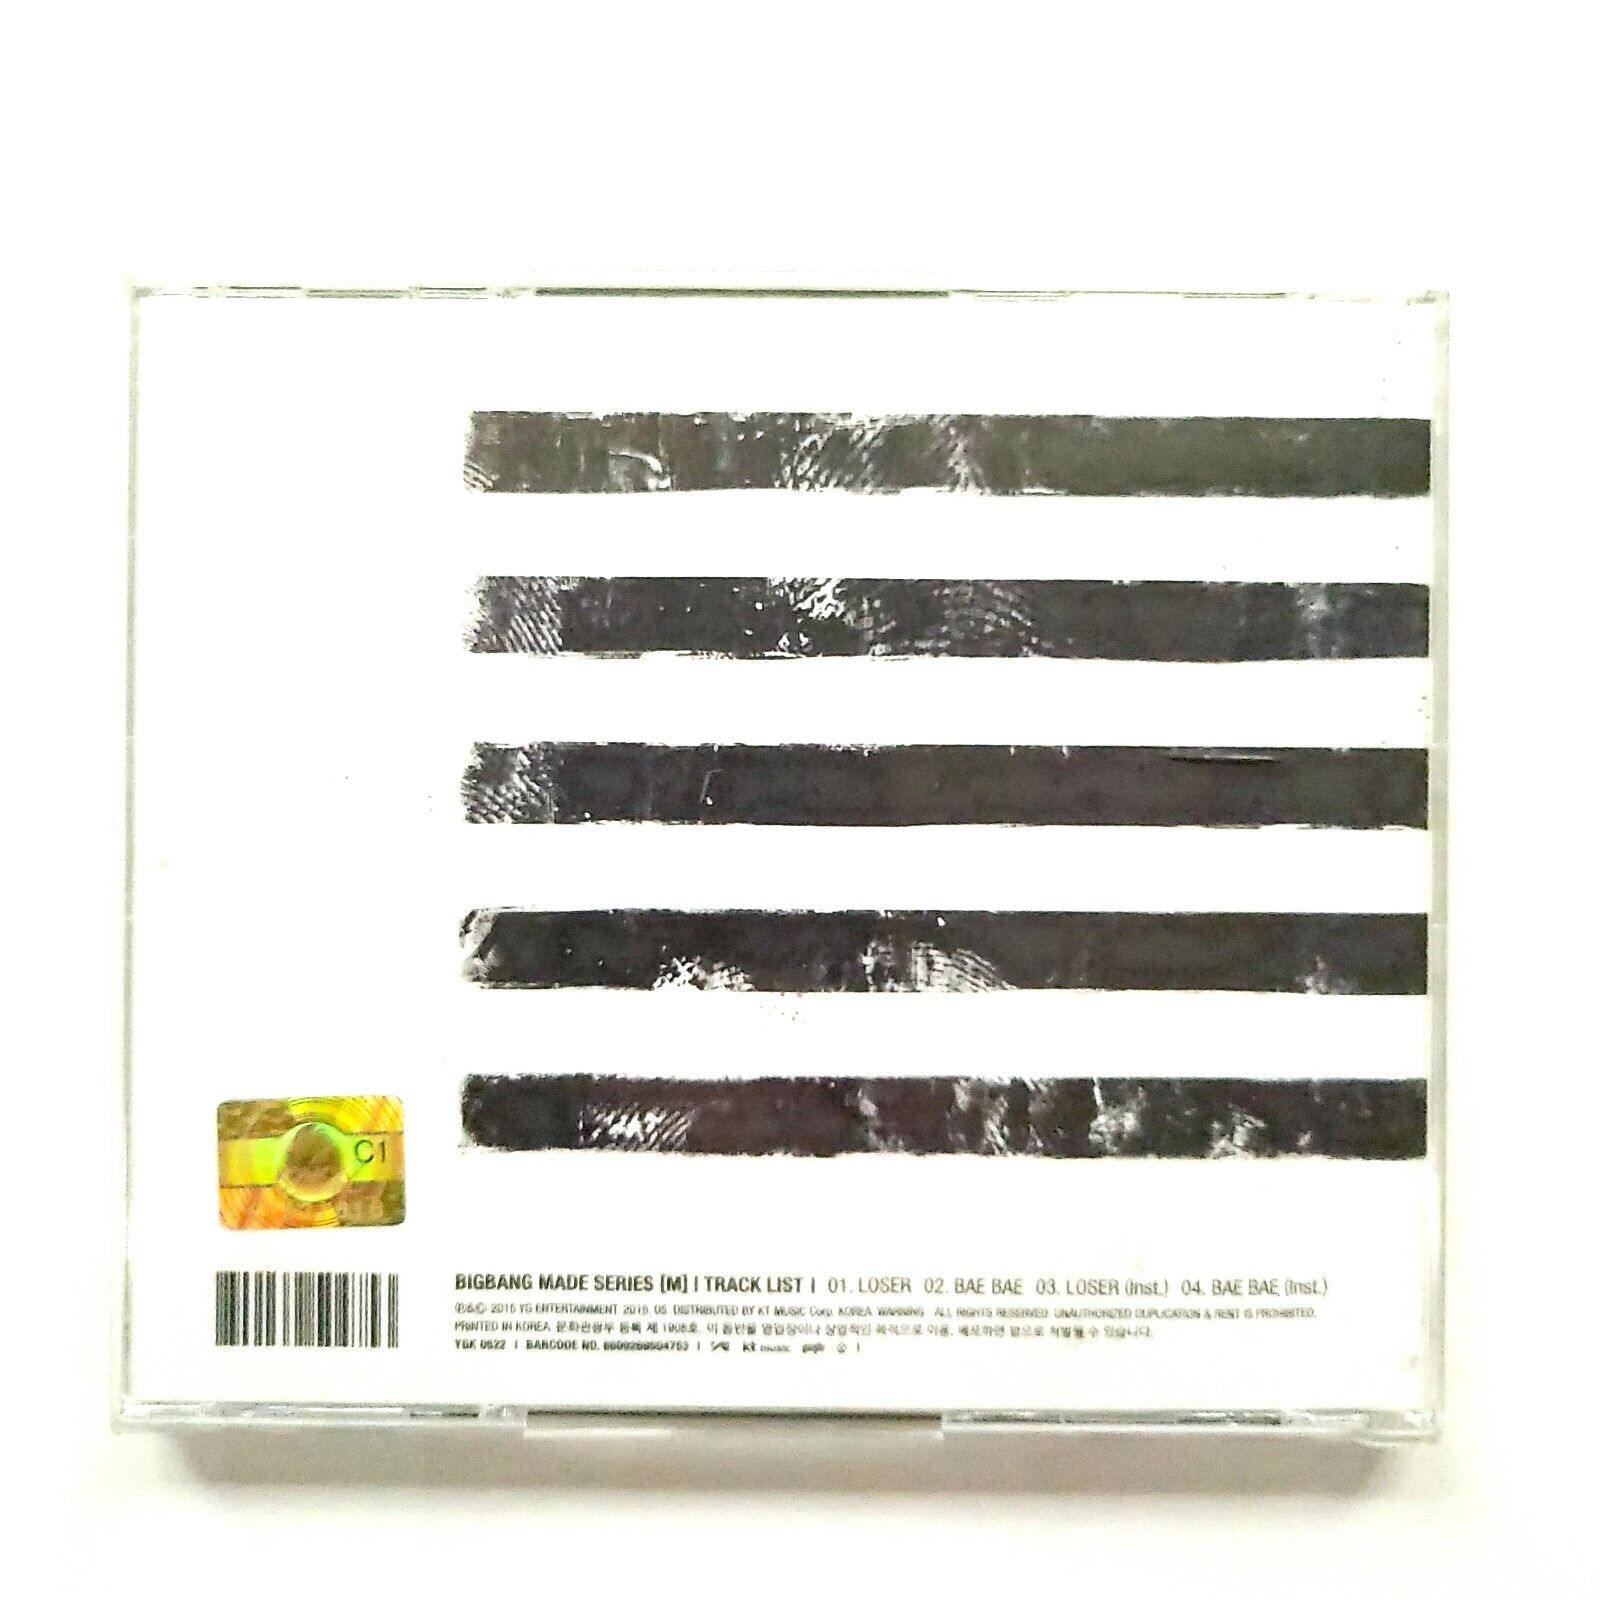 Bigbang Made Series by Bigbang (CD, 2015) for sale online | eBay